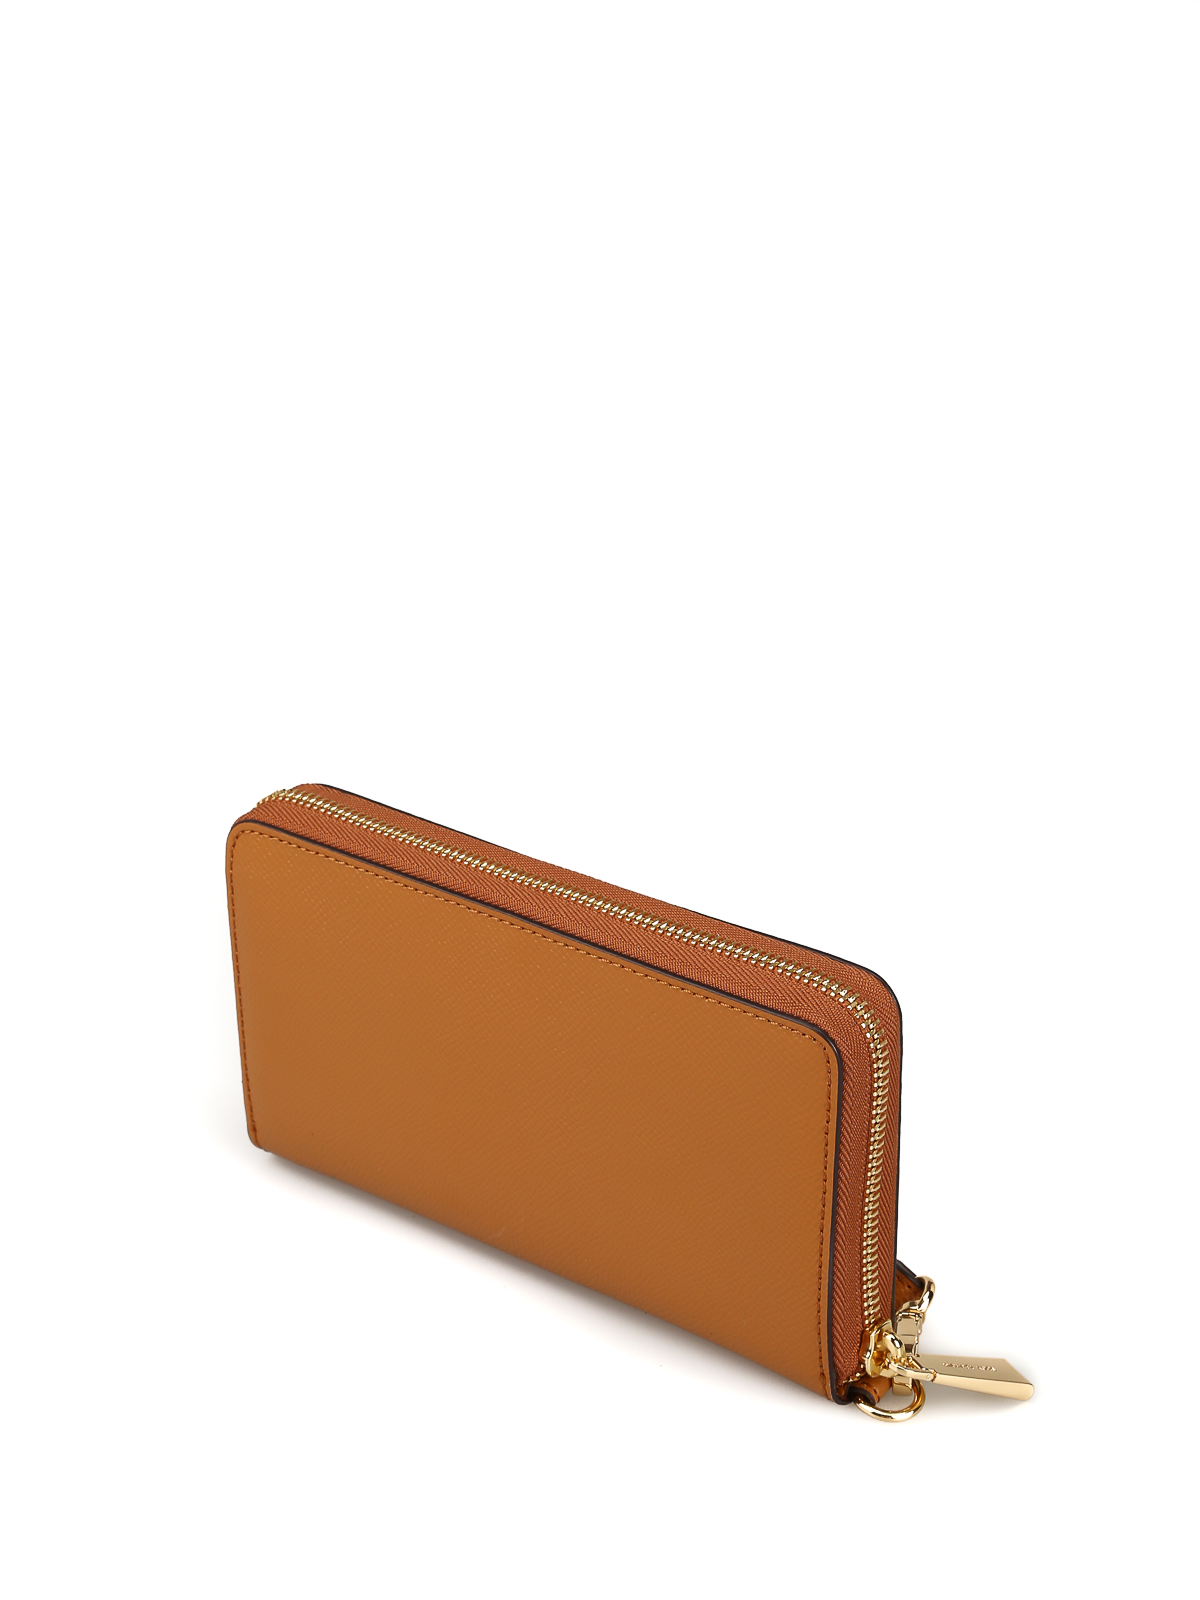 orange and brown michael kors purse